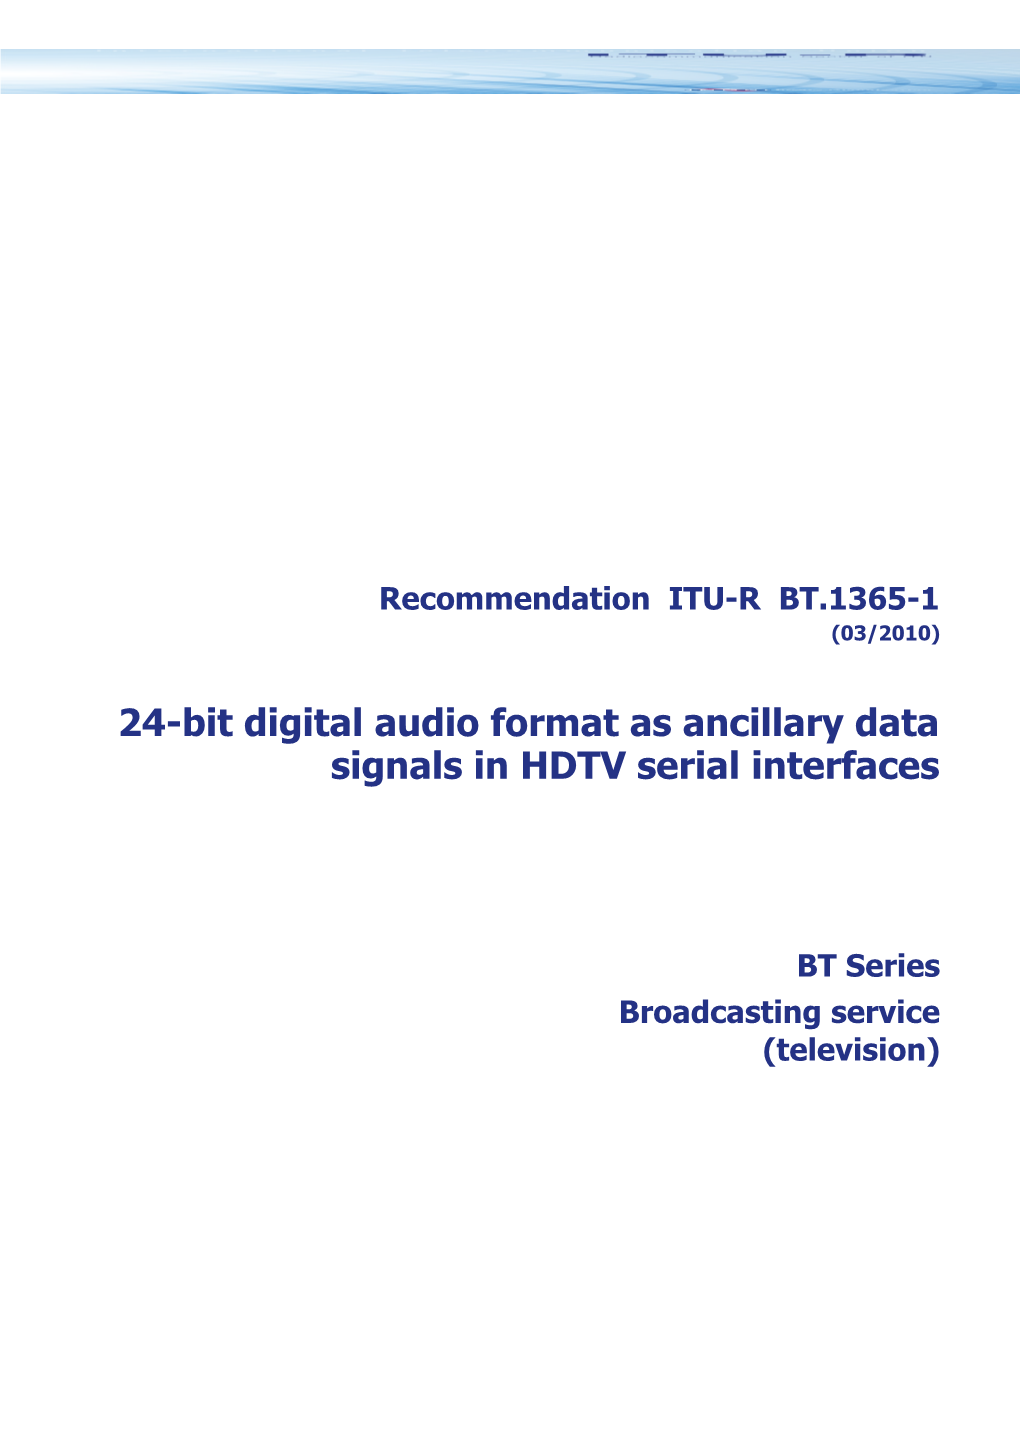 RECOMMENDATION ITU-R BT.1365-1 - 24-Bit Digital Audio Format As Ancillary Data Signals